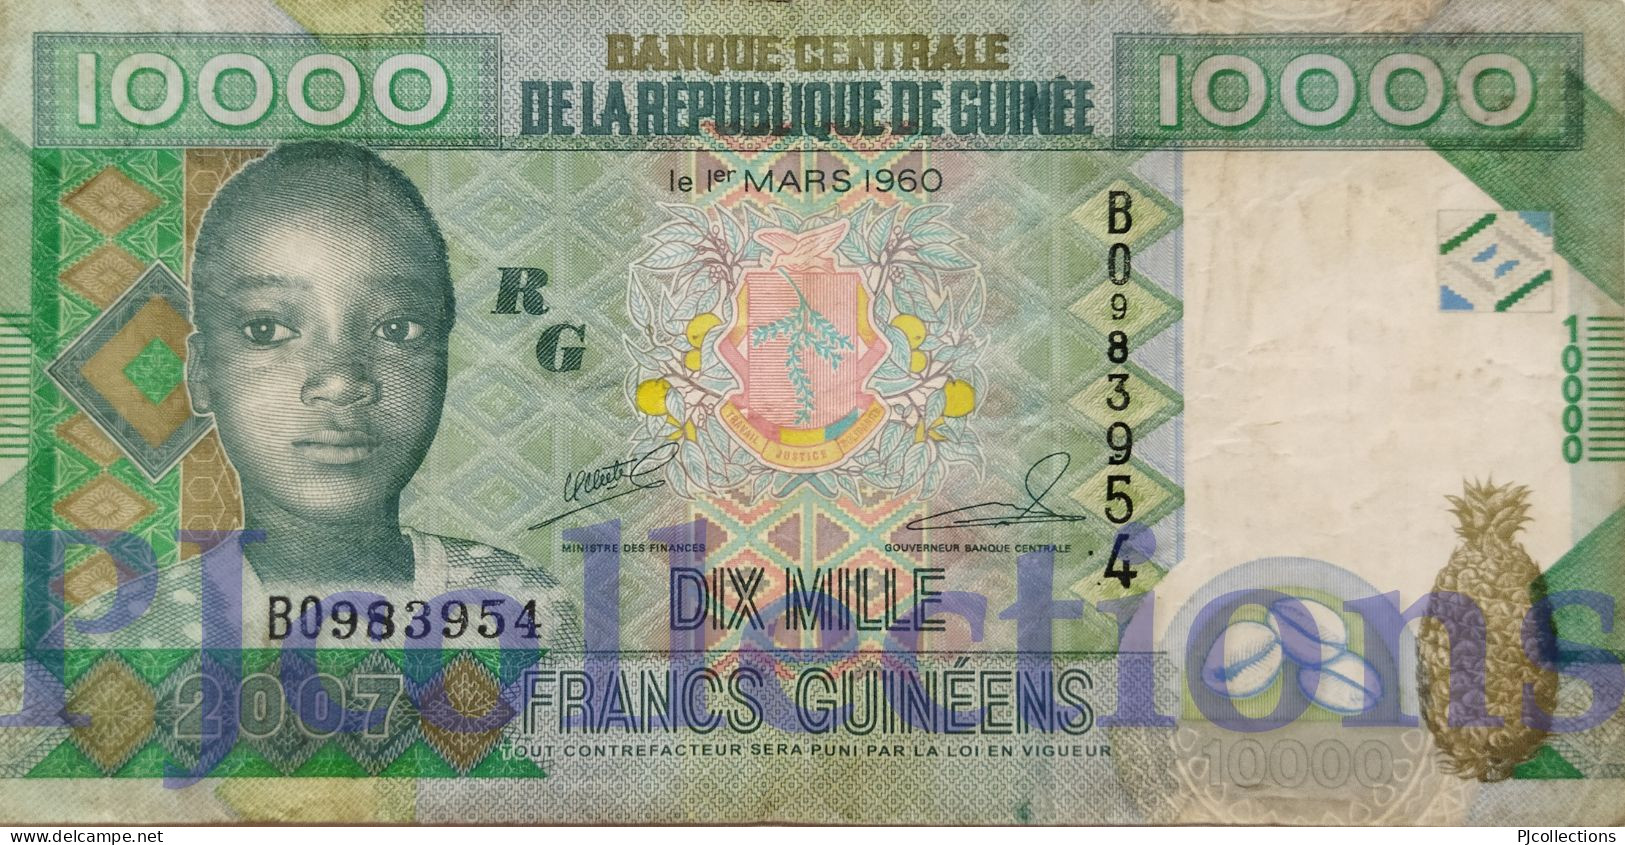 GUINEA 10000 FRANCS 2007 PICK 42a AVF - Guinea